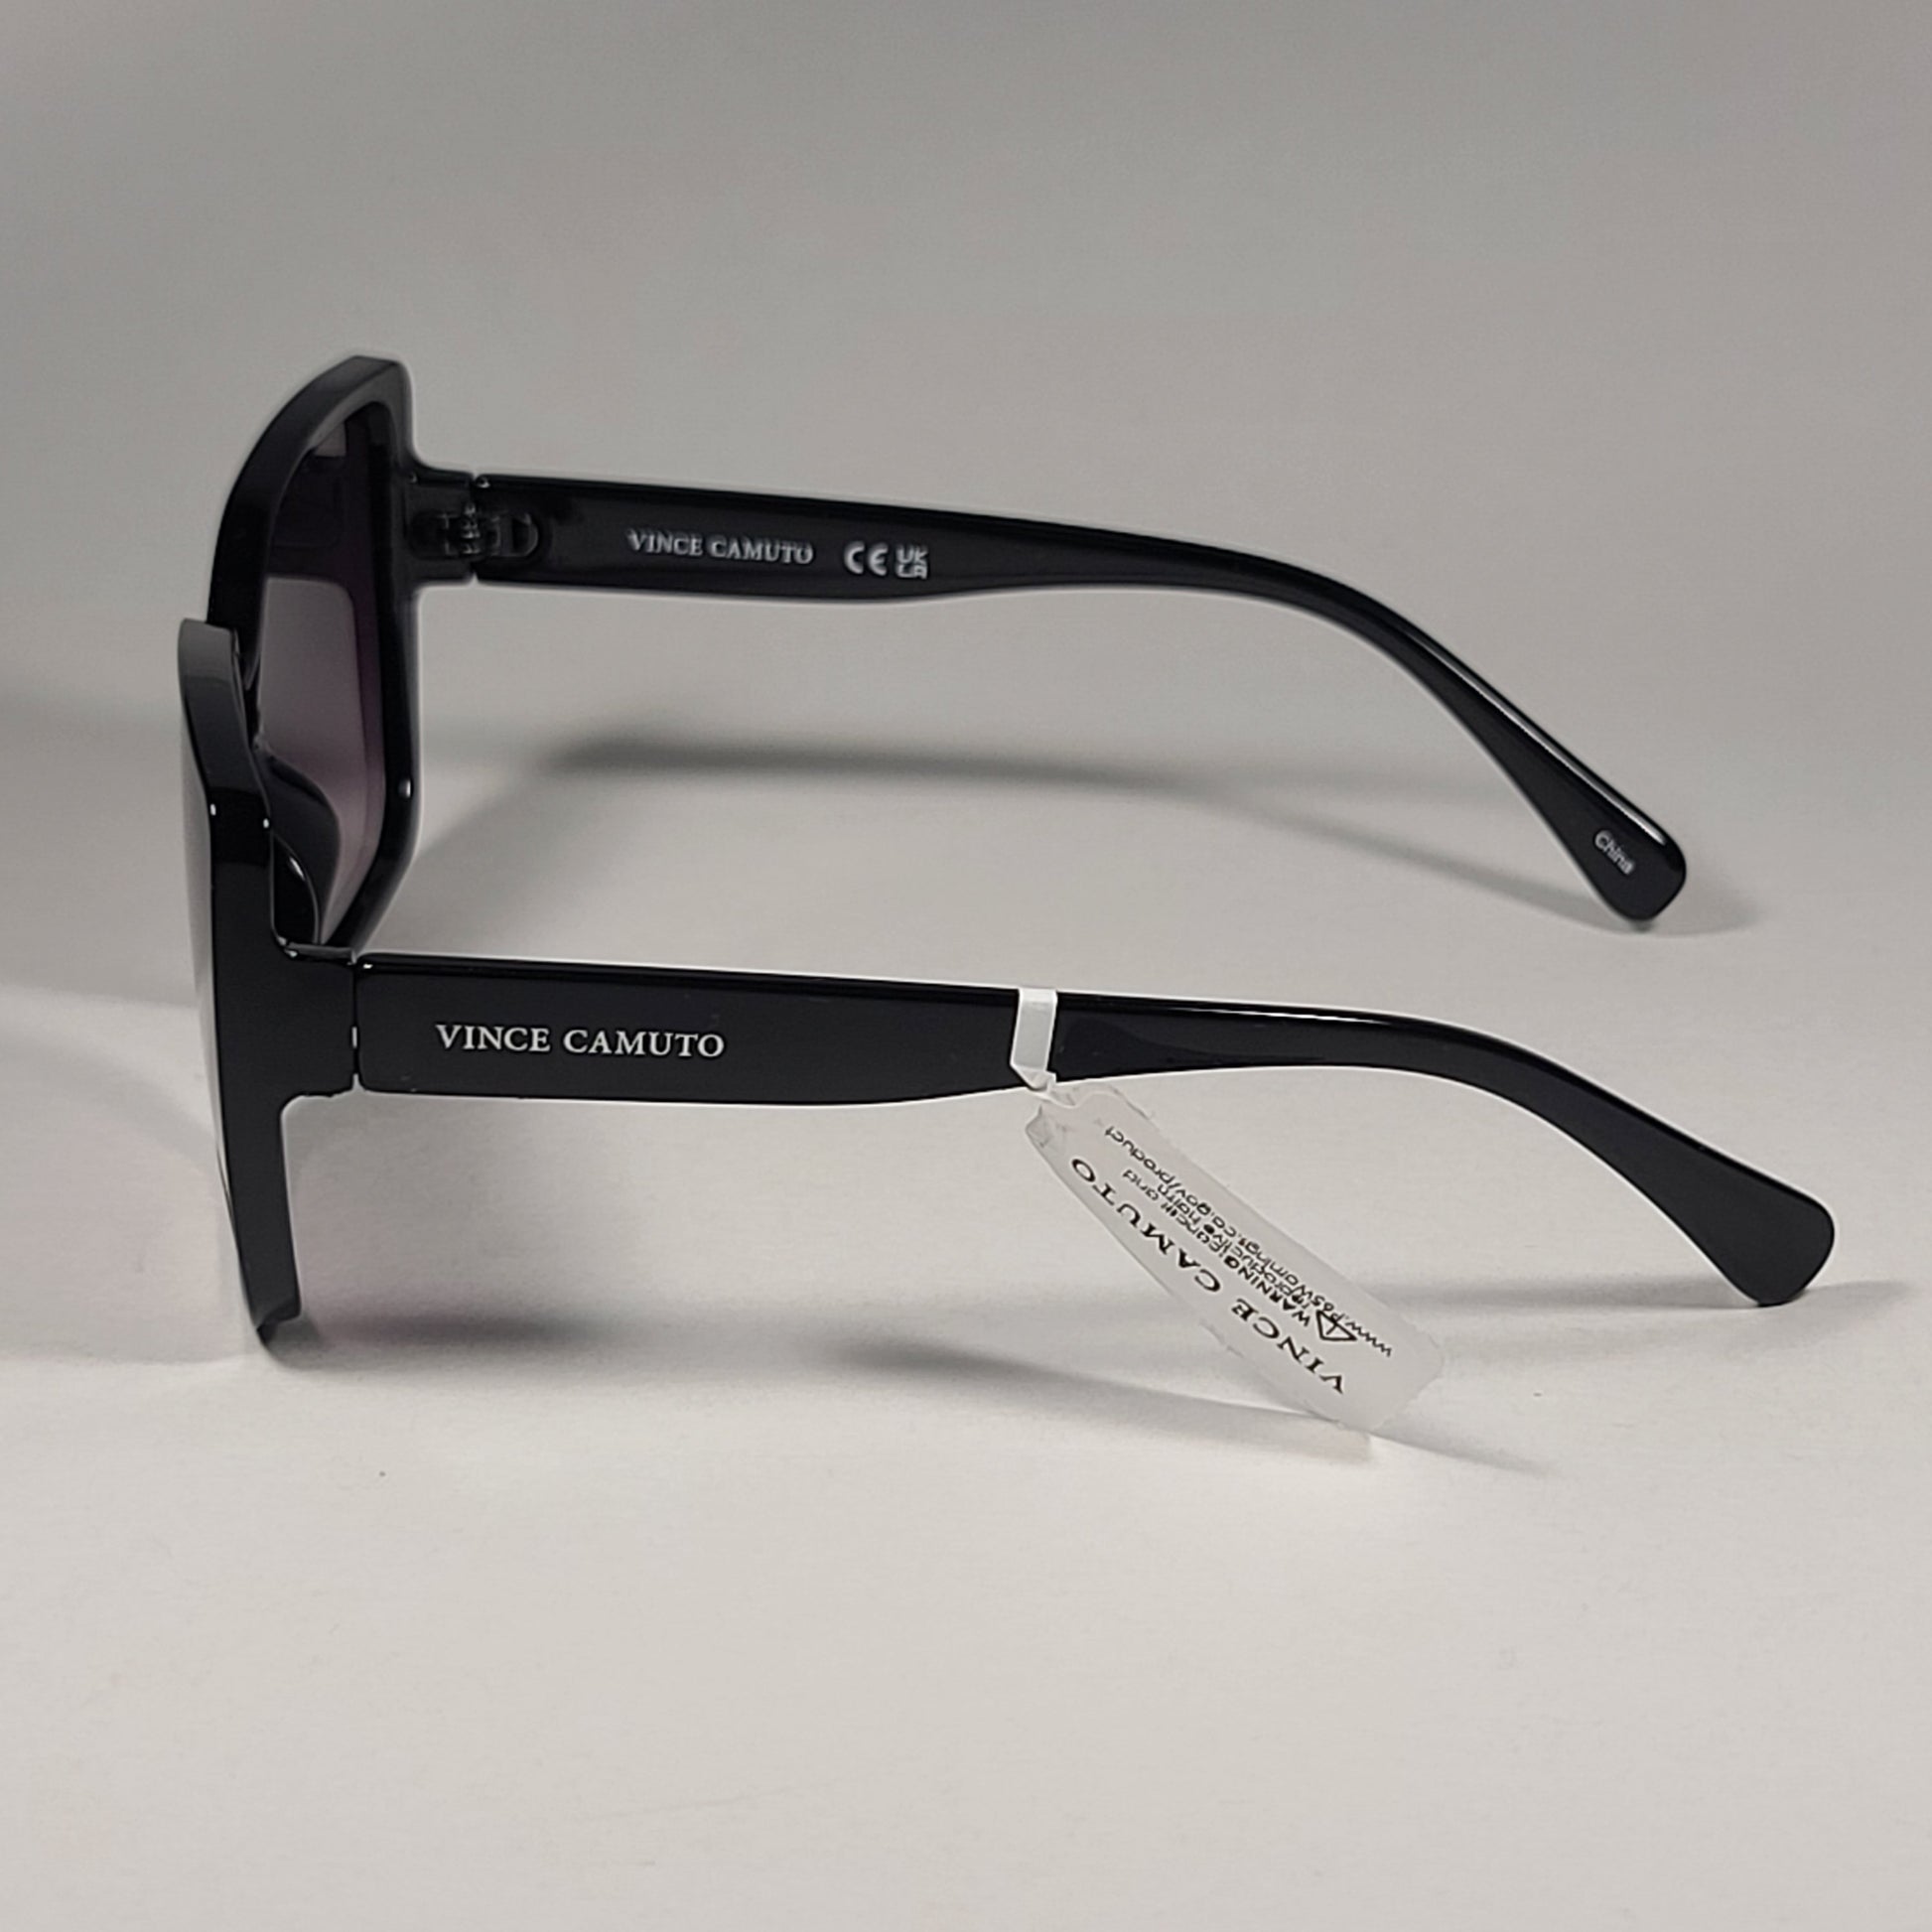 Vince Camuto VC999 OX Butterfly Shield Sunglasses Black Frame Smoke Gradient Lens - Sunglasses